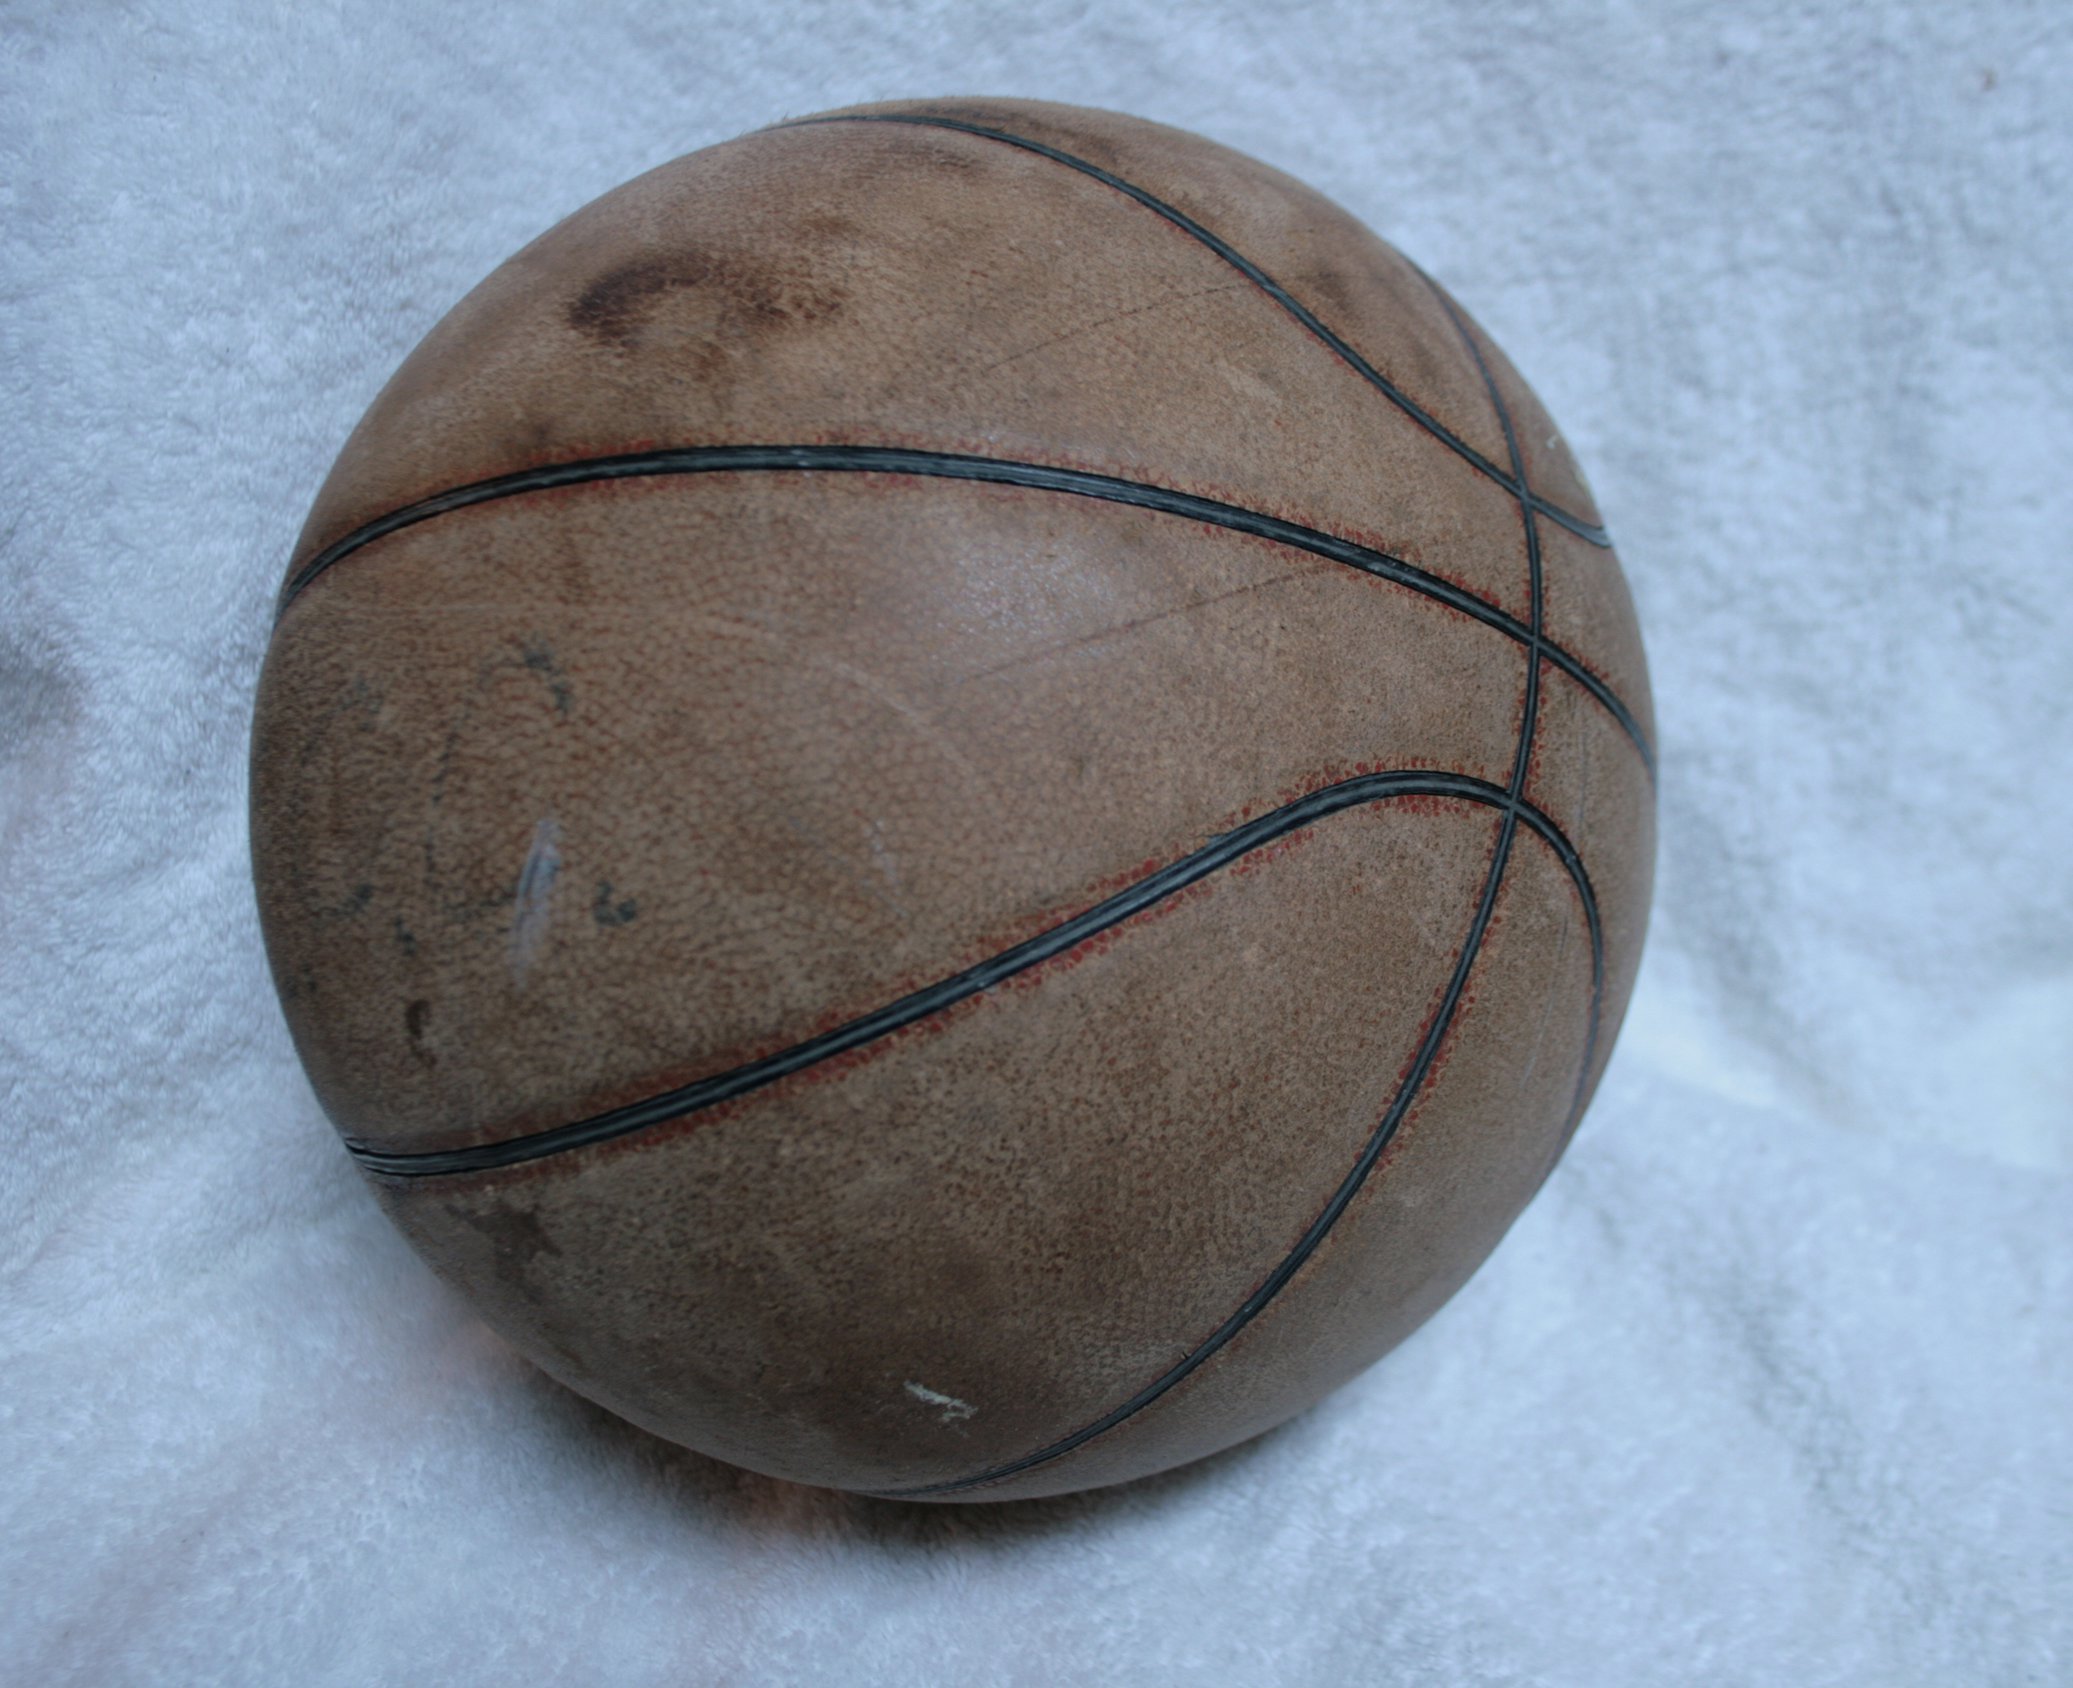 Old basketball photo